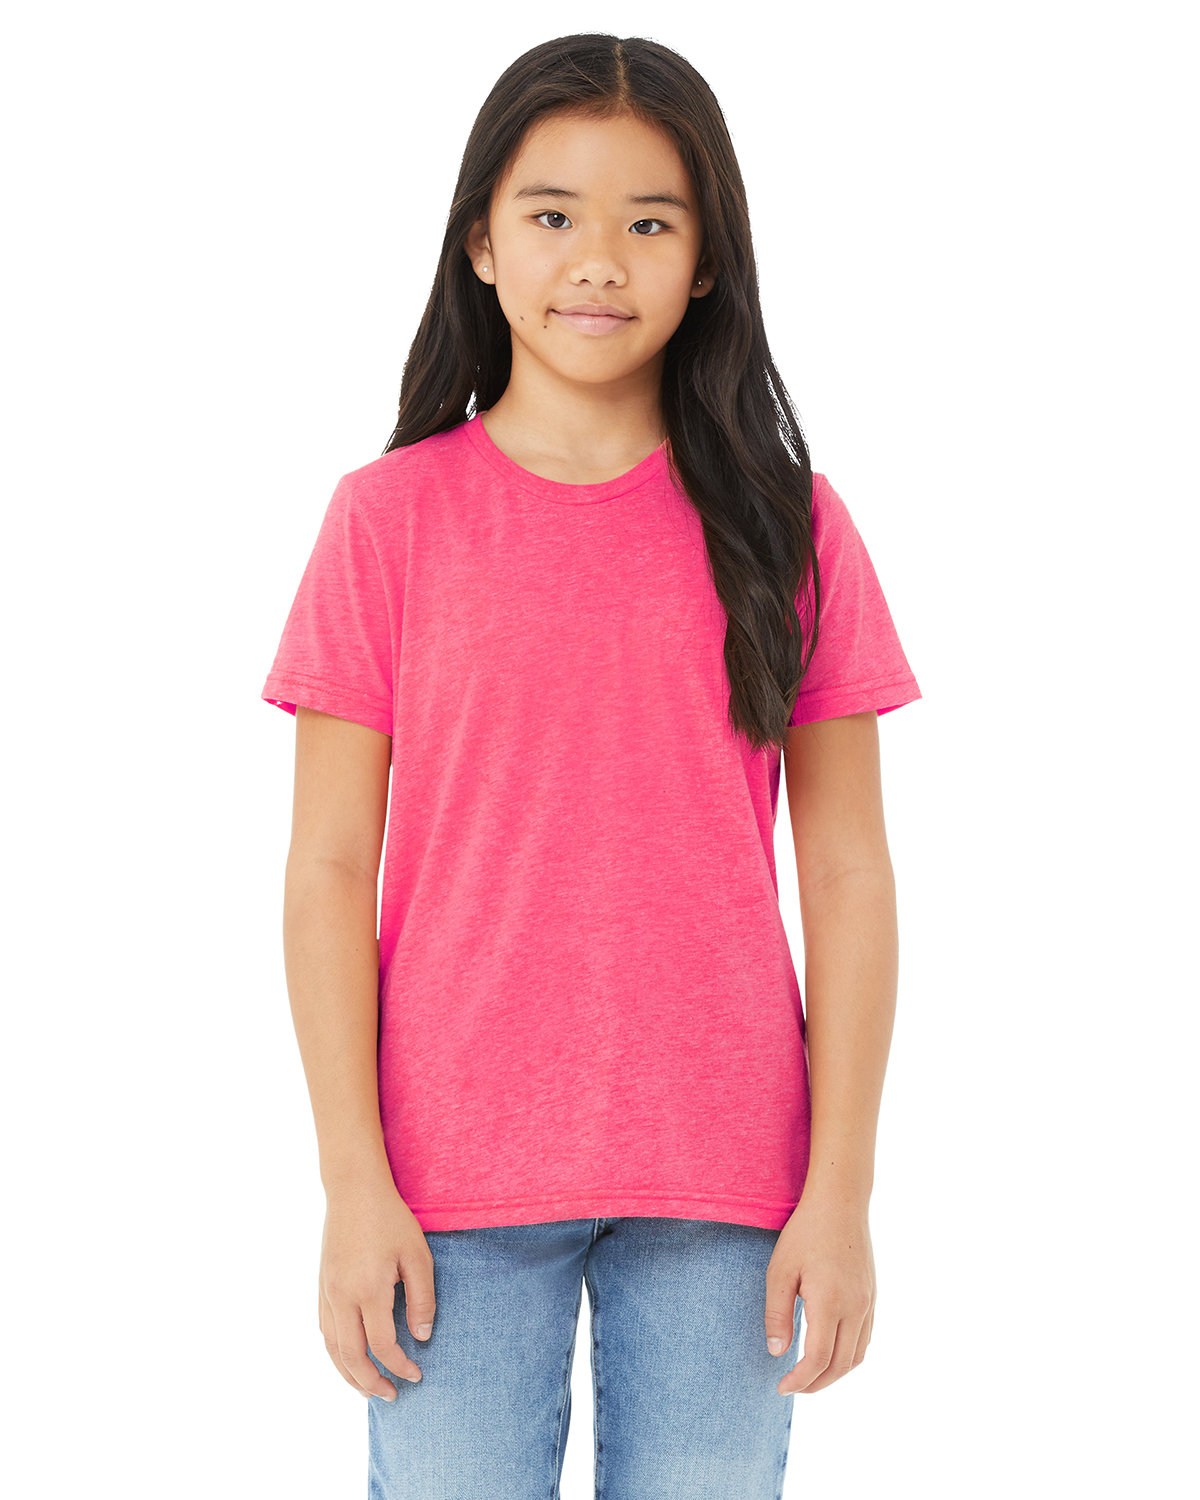 Bella + Canvas Youth Triblend Short-Sleeve T-Shirt CHAR PNK TRIBLND 